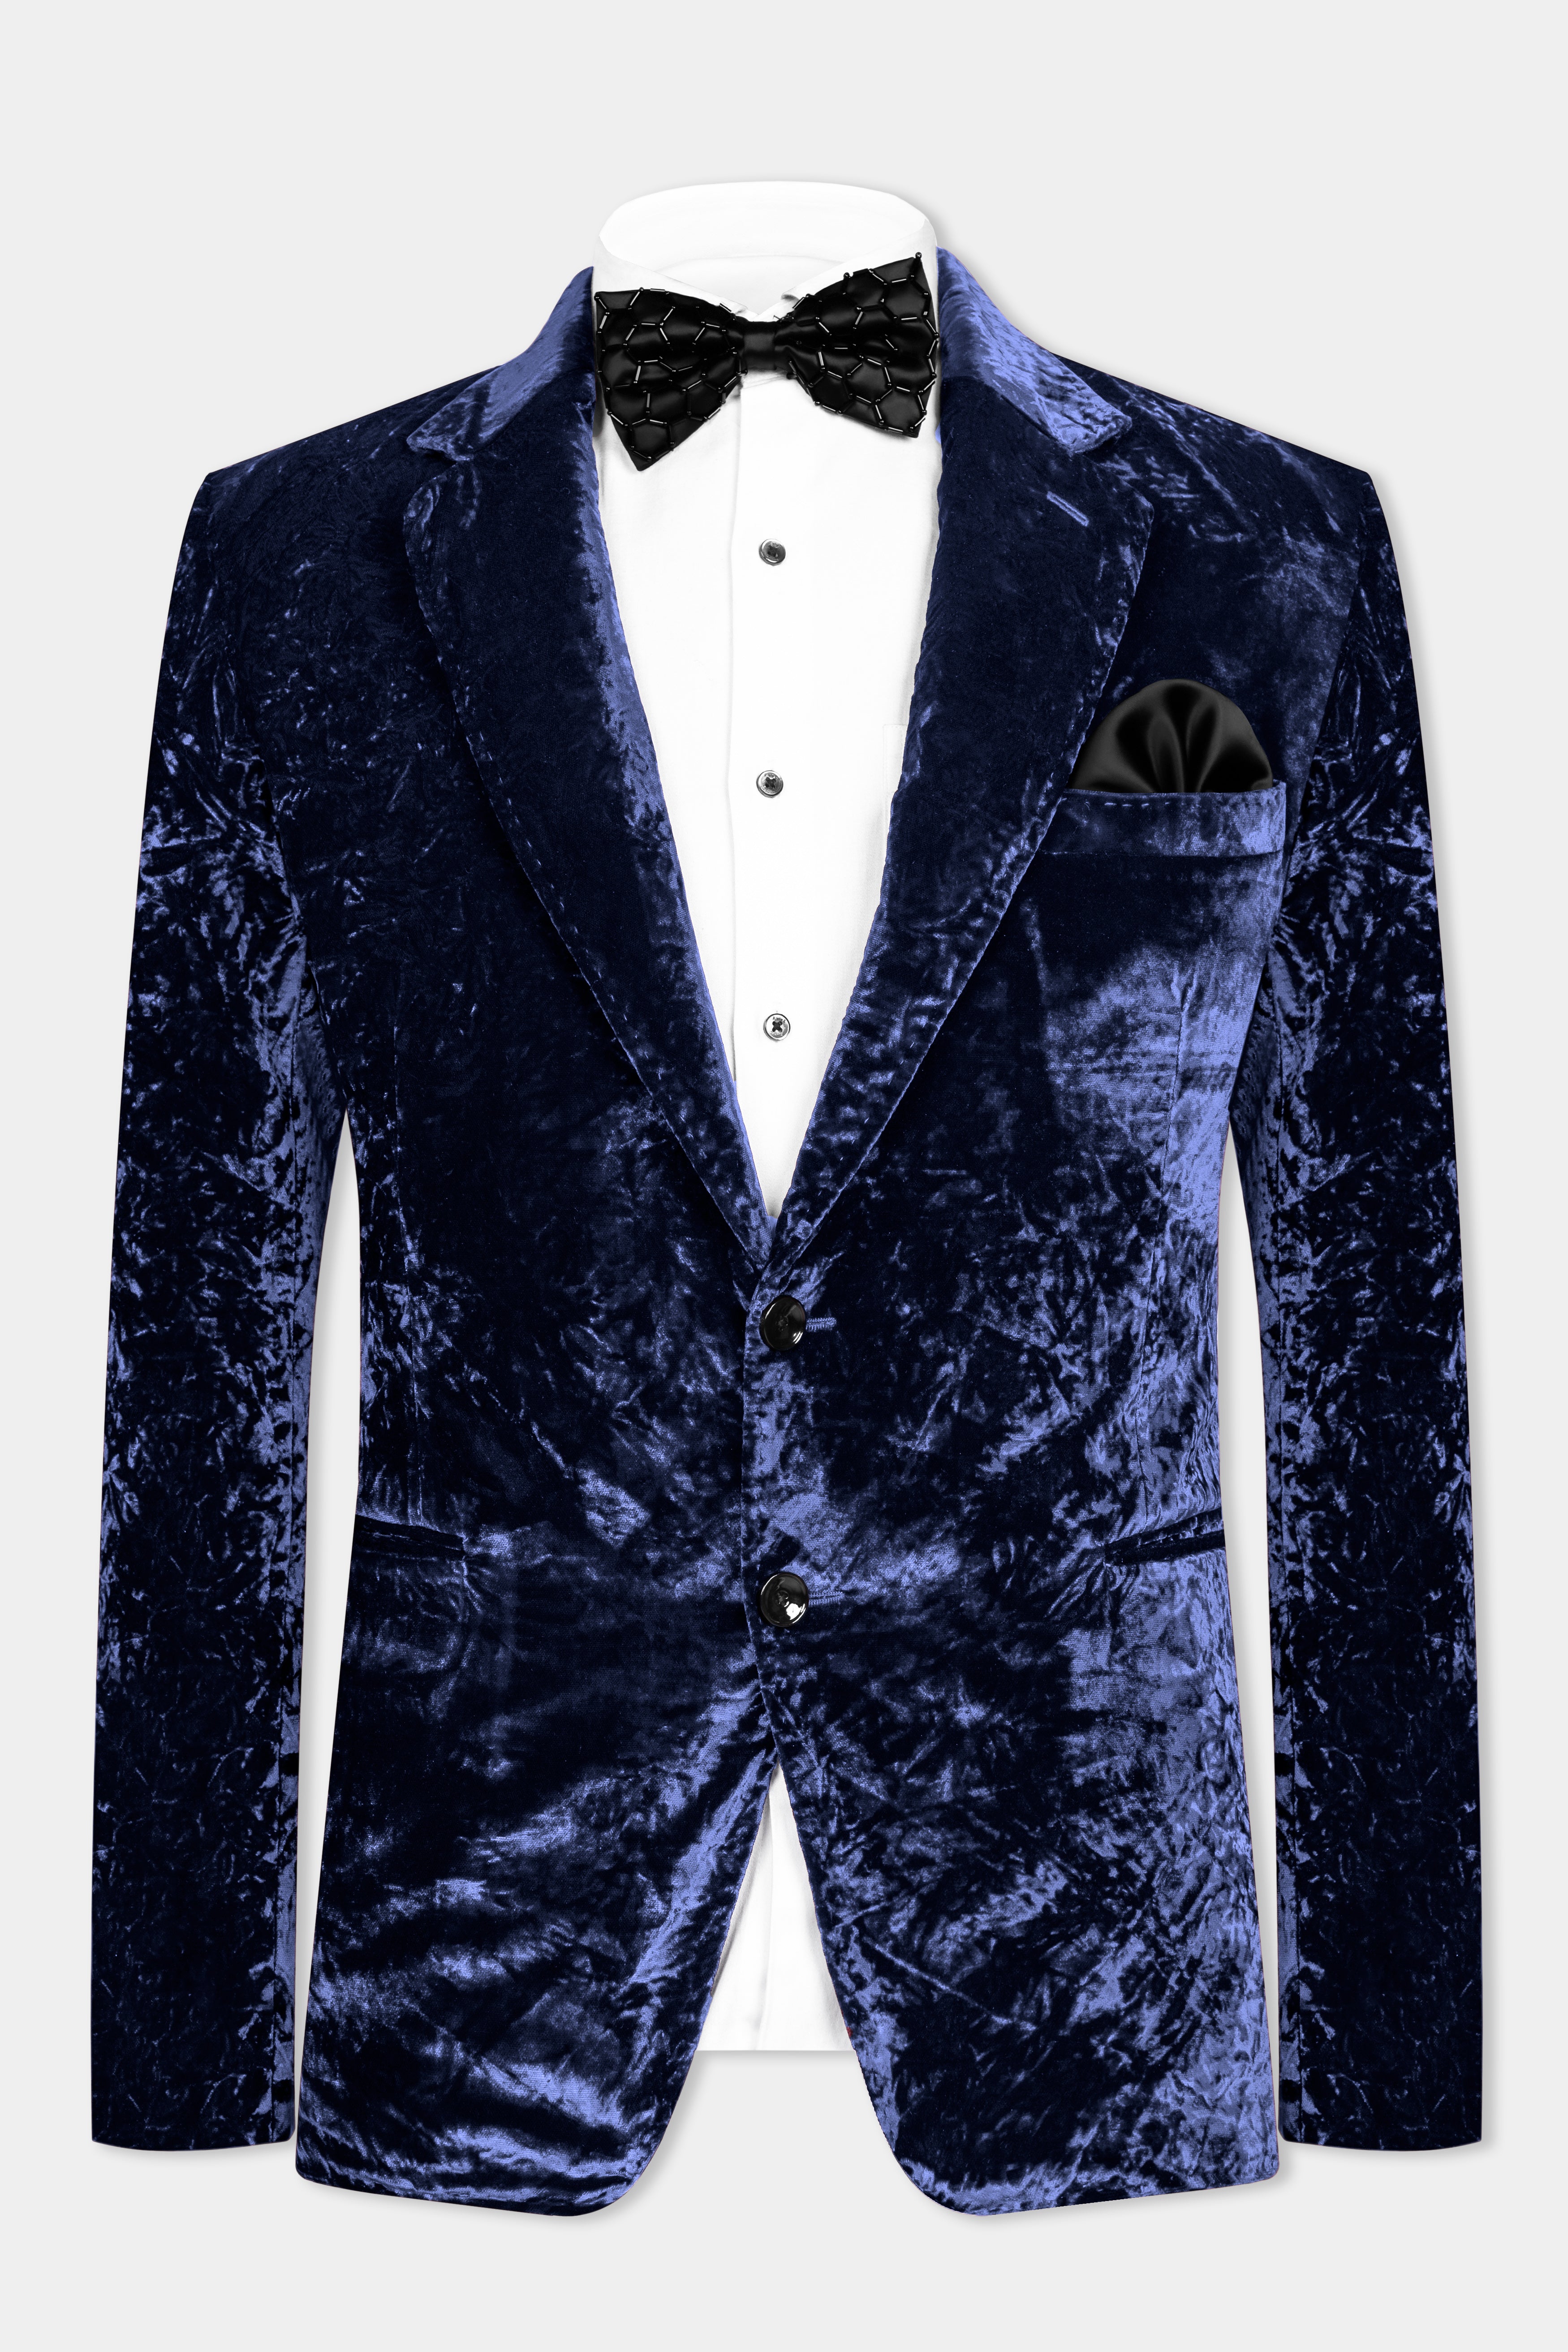 Shop Navy Blue Blazer for Men Online from India's Luxury Designers 2024